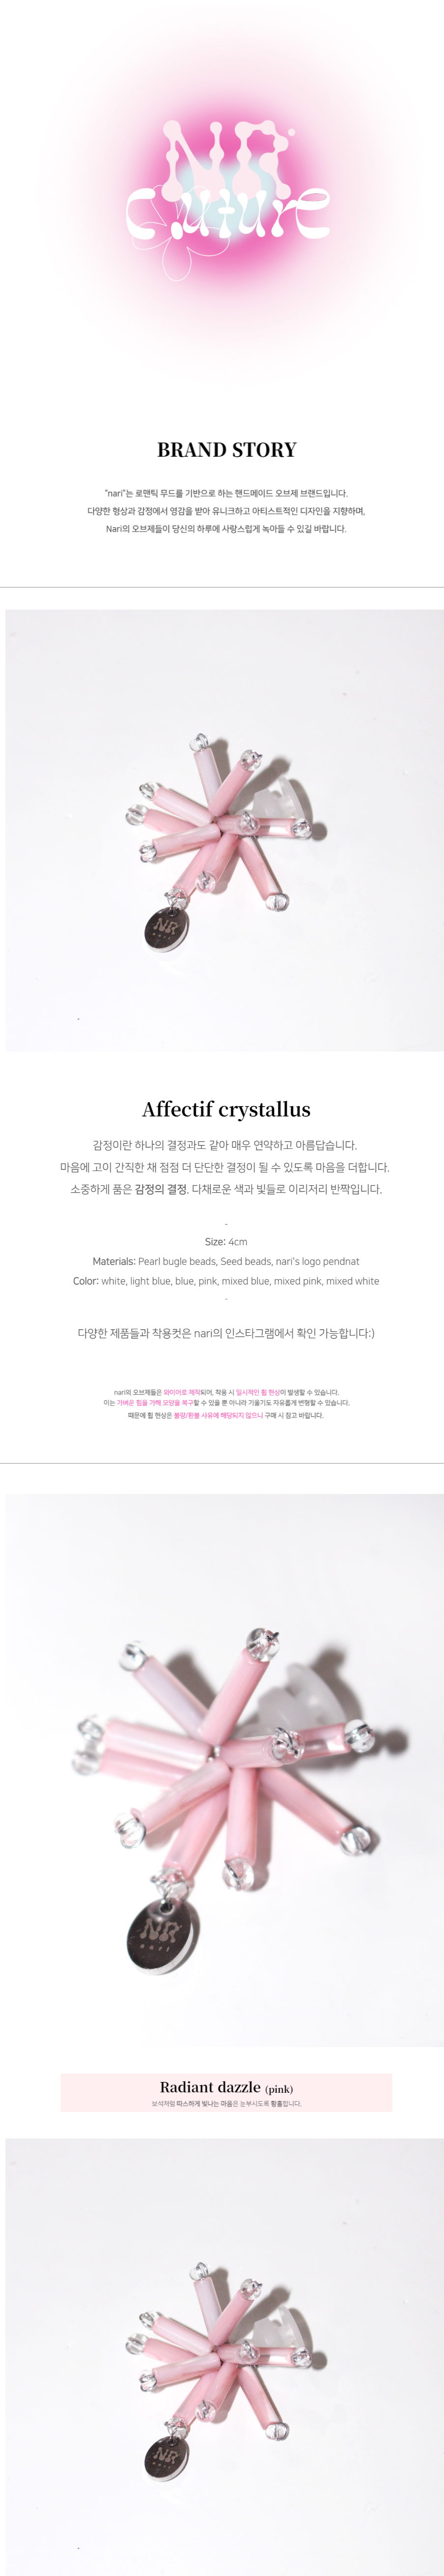 (COUTURE) Affectif crystallus jibbitz _ pink